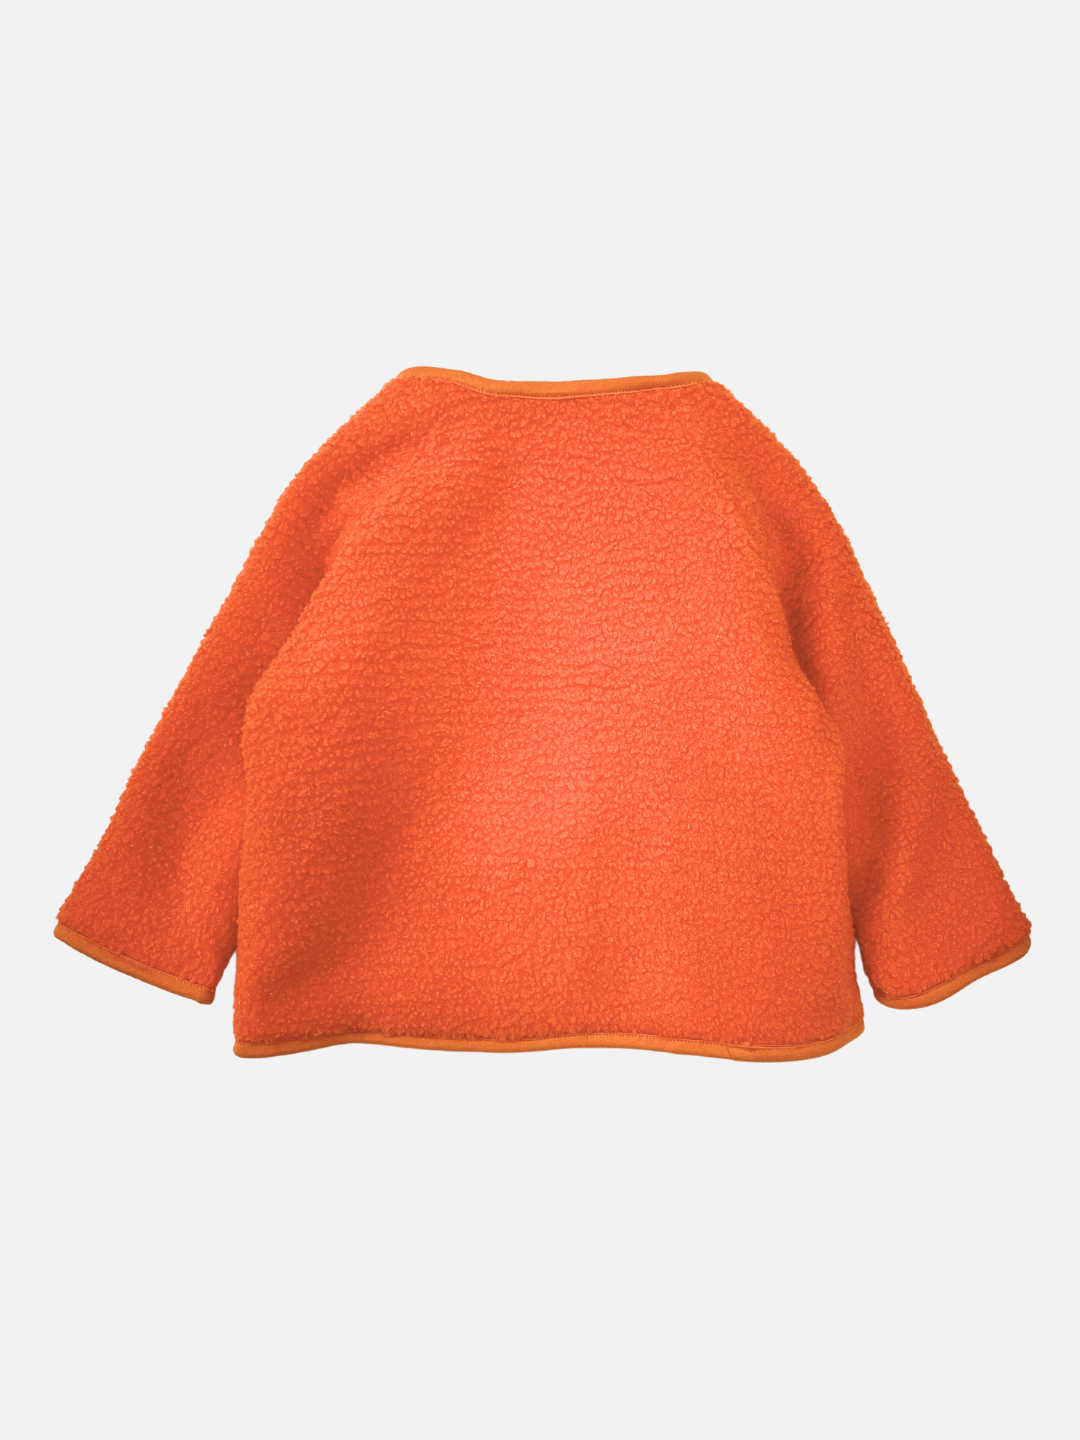 Back view of a kids orange collarless fleece jacket.